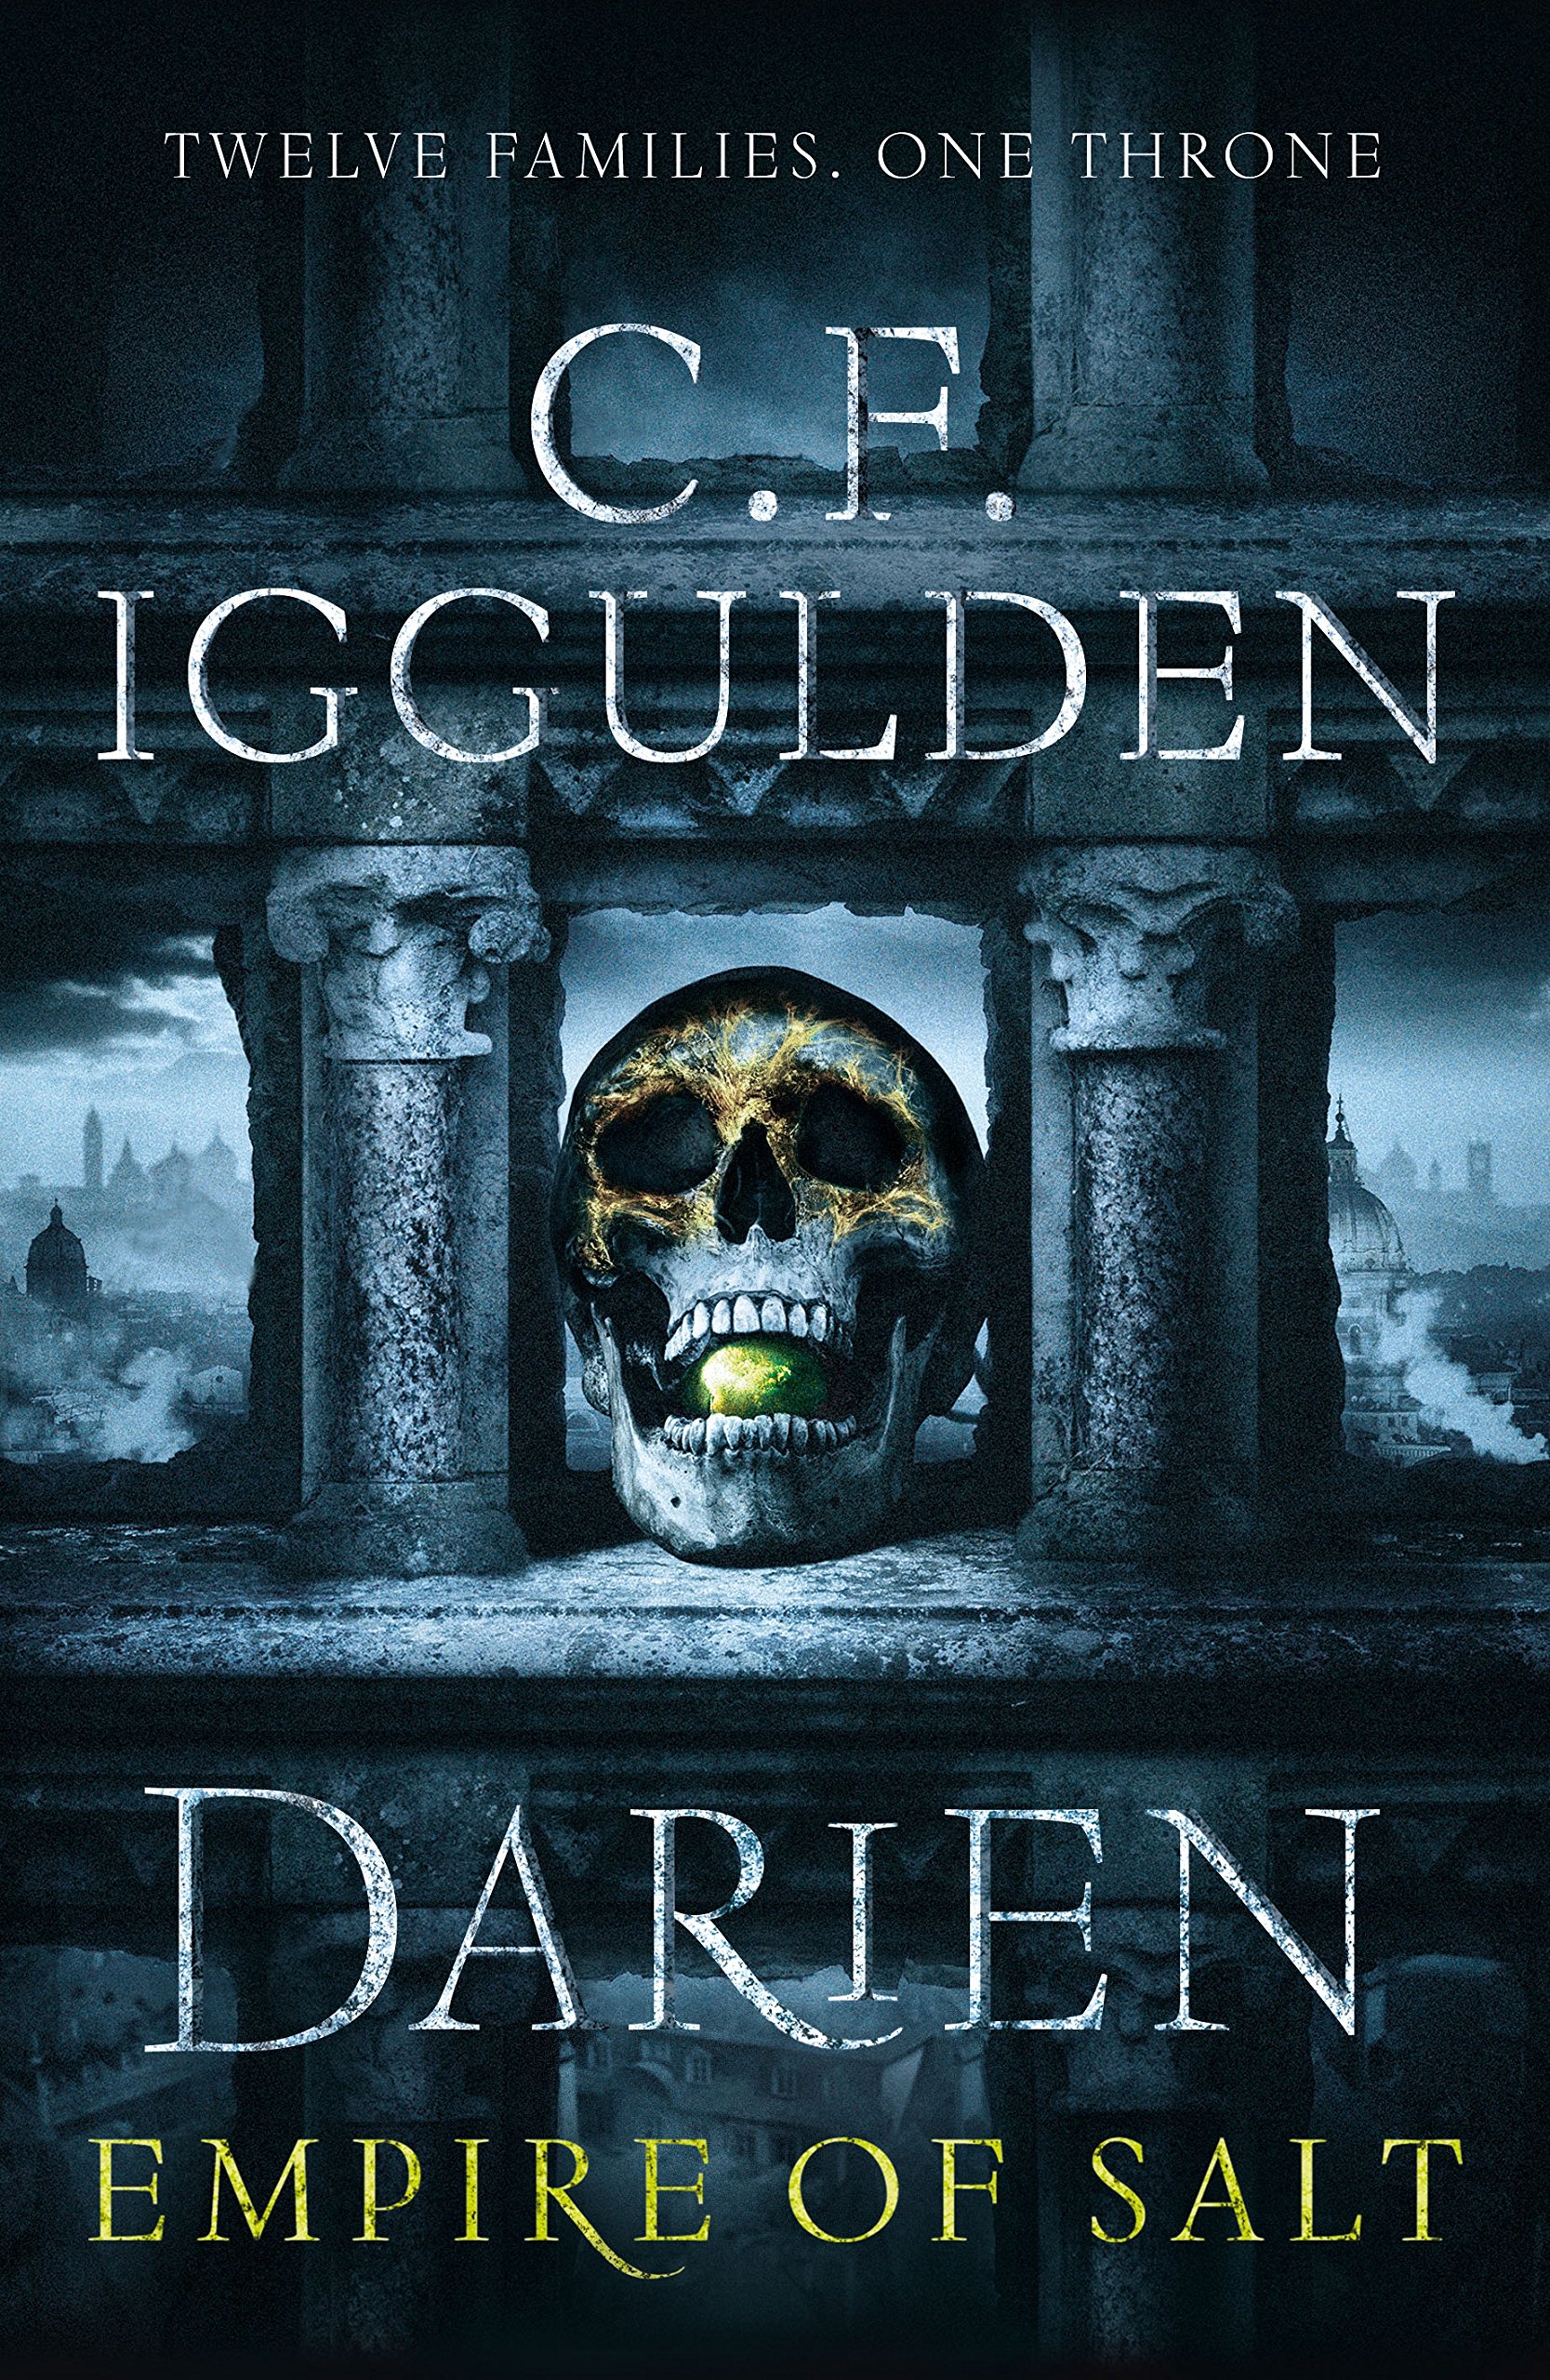 Vezi detalii pentru Darien: Empire of Salt | C. F. Iggulden